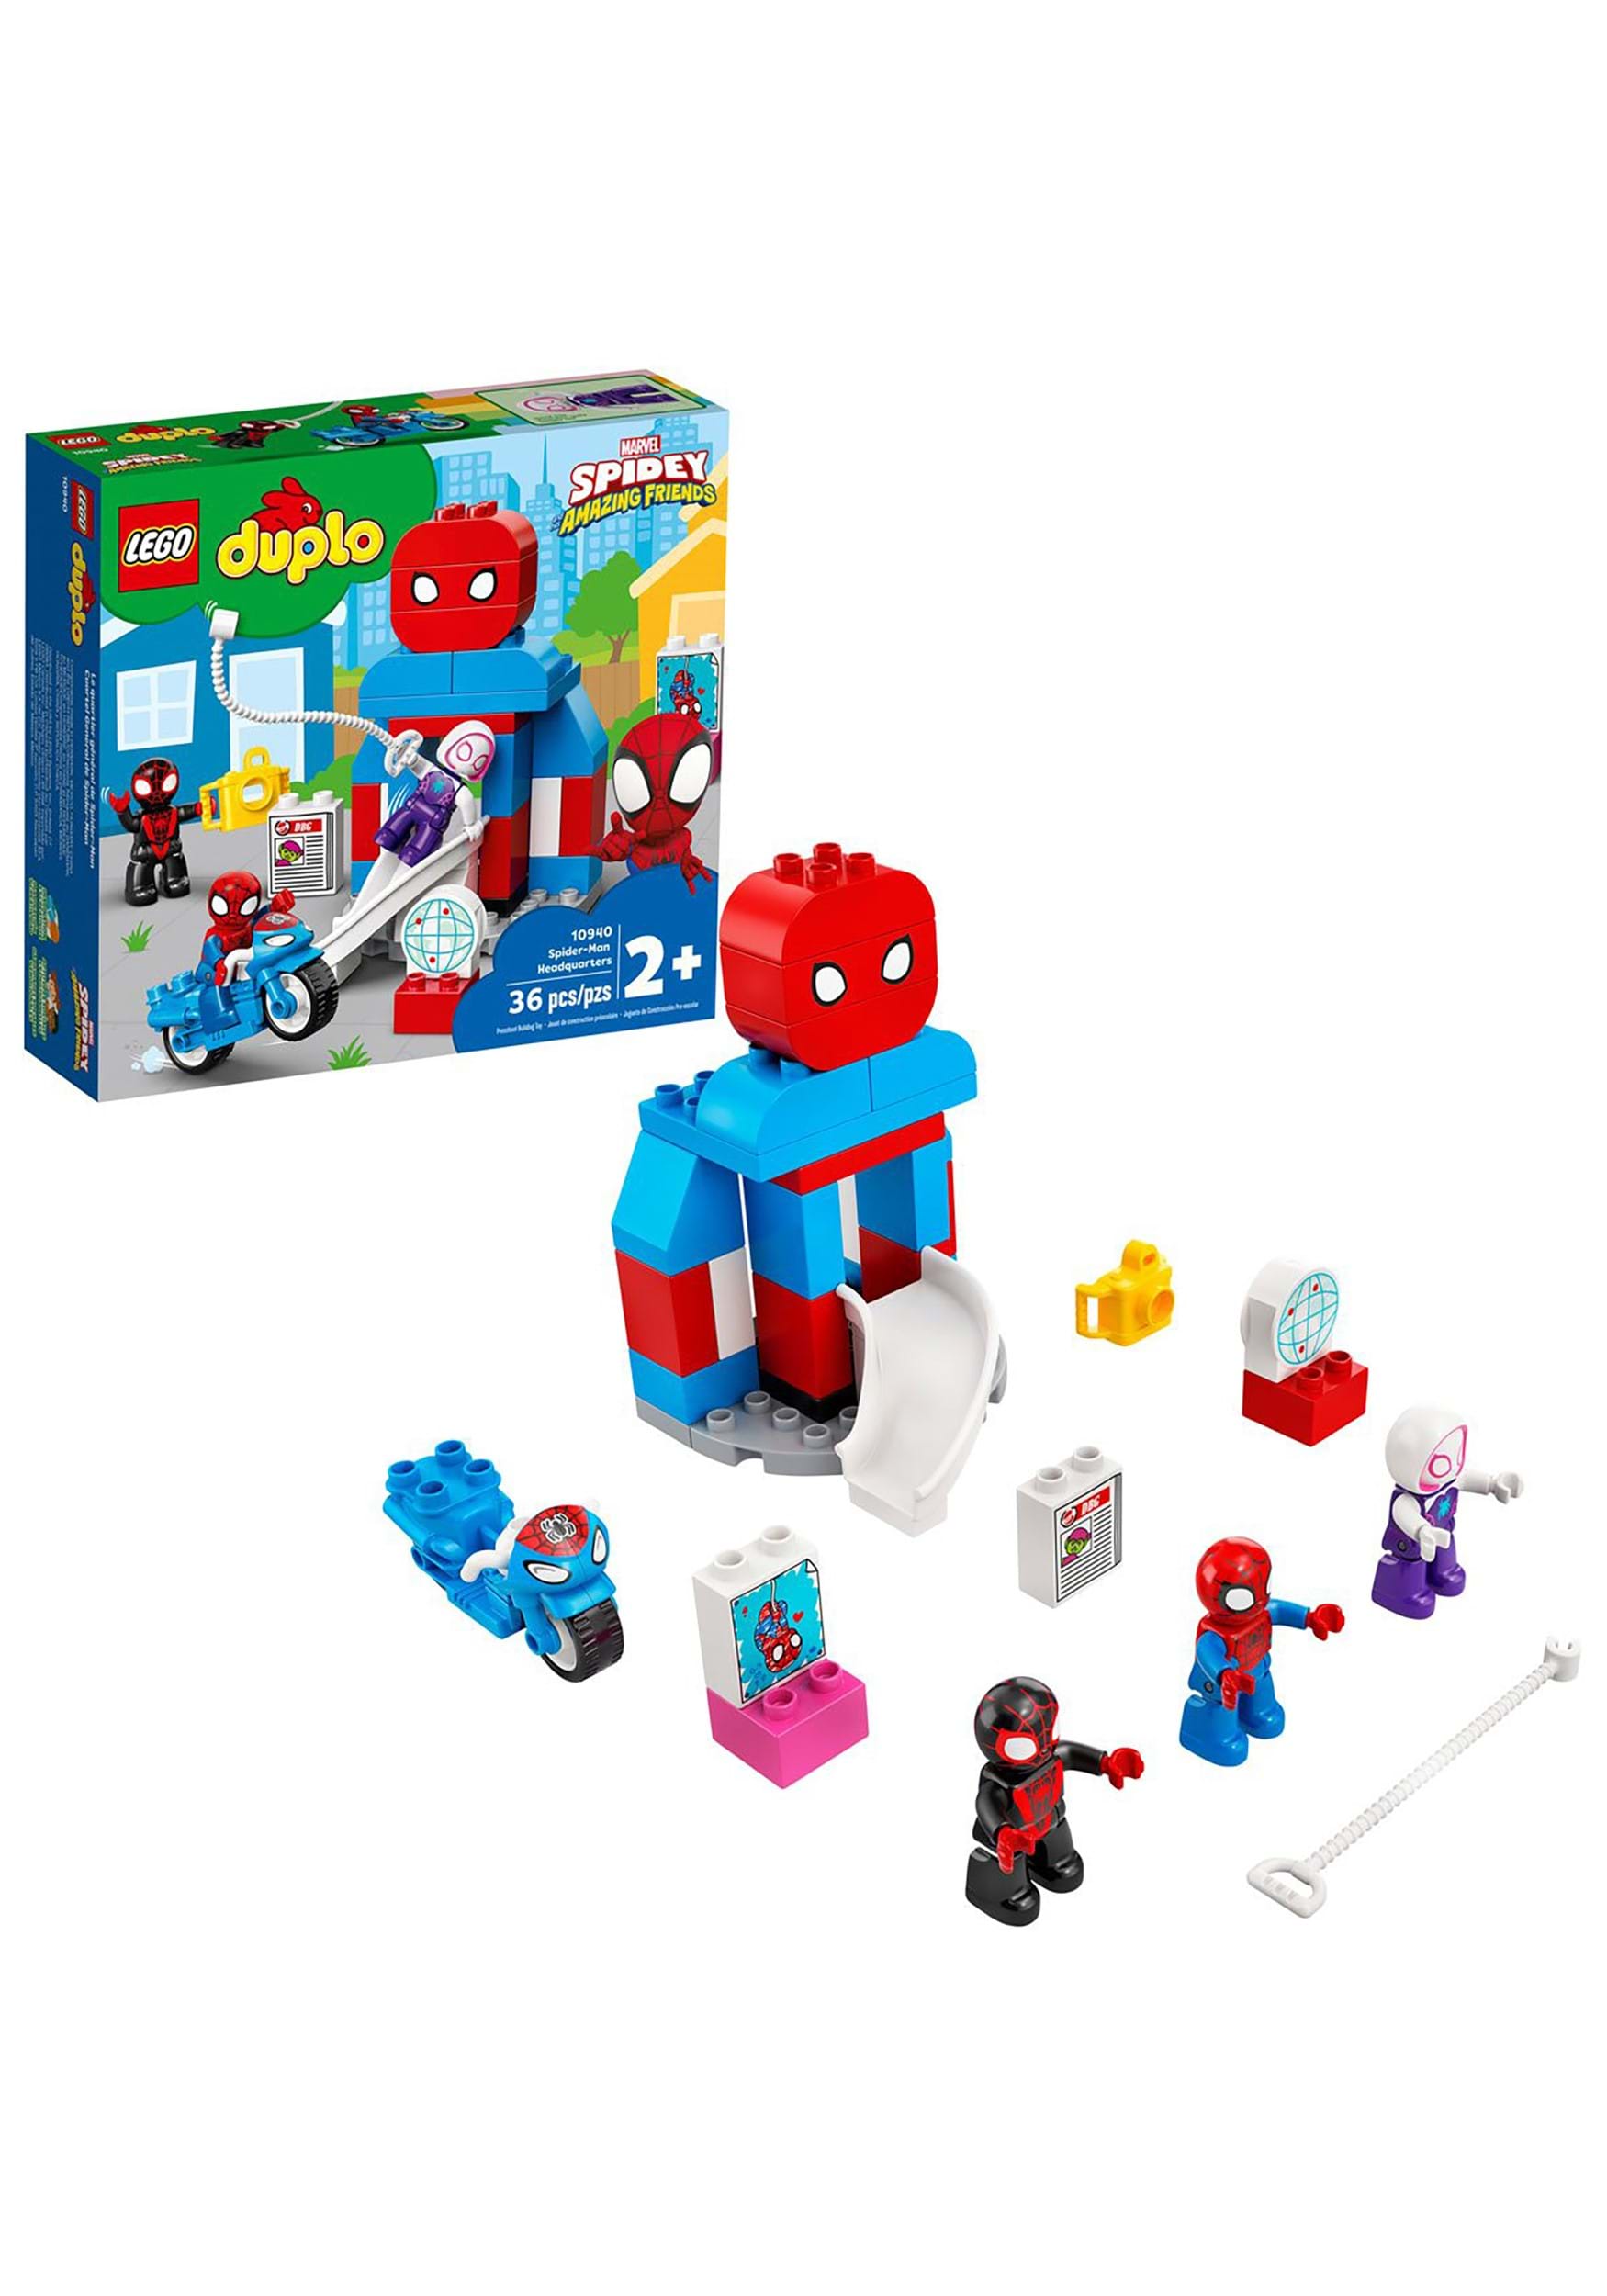 LEGO Duplo Spider-Man Headquarters Set